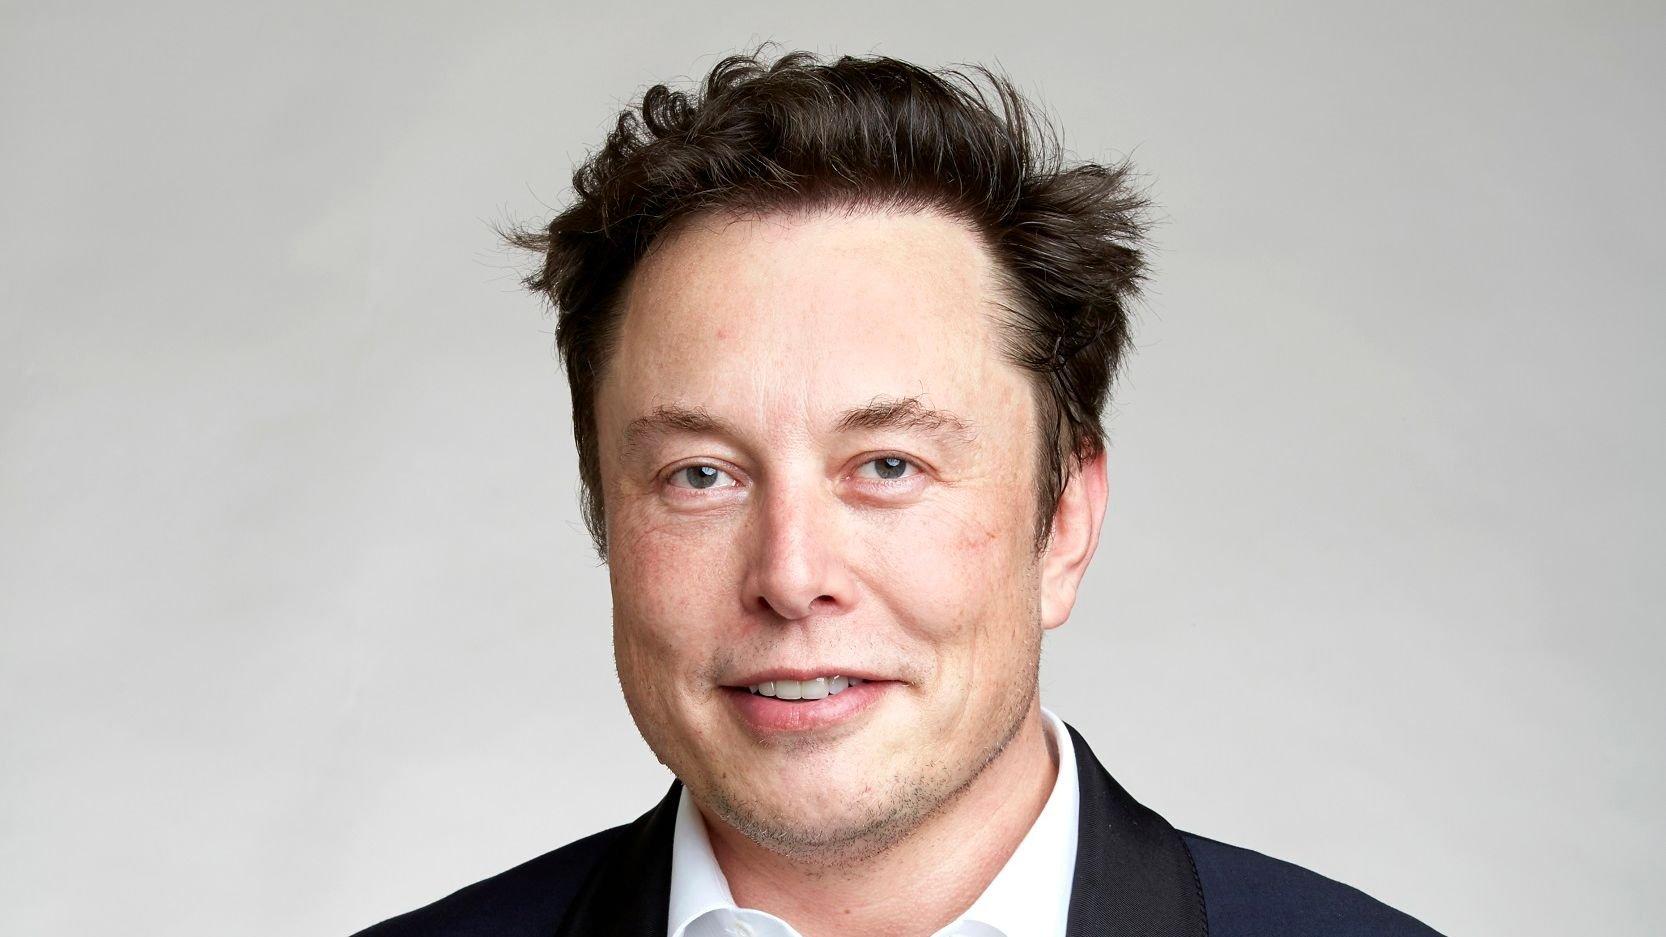 Tesla founder Elon Musk looks on